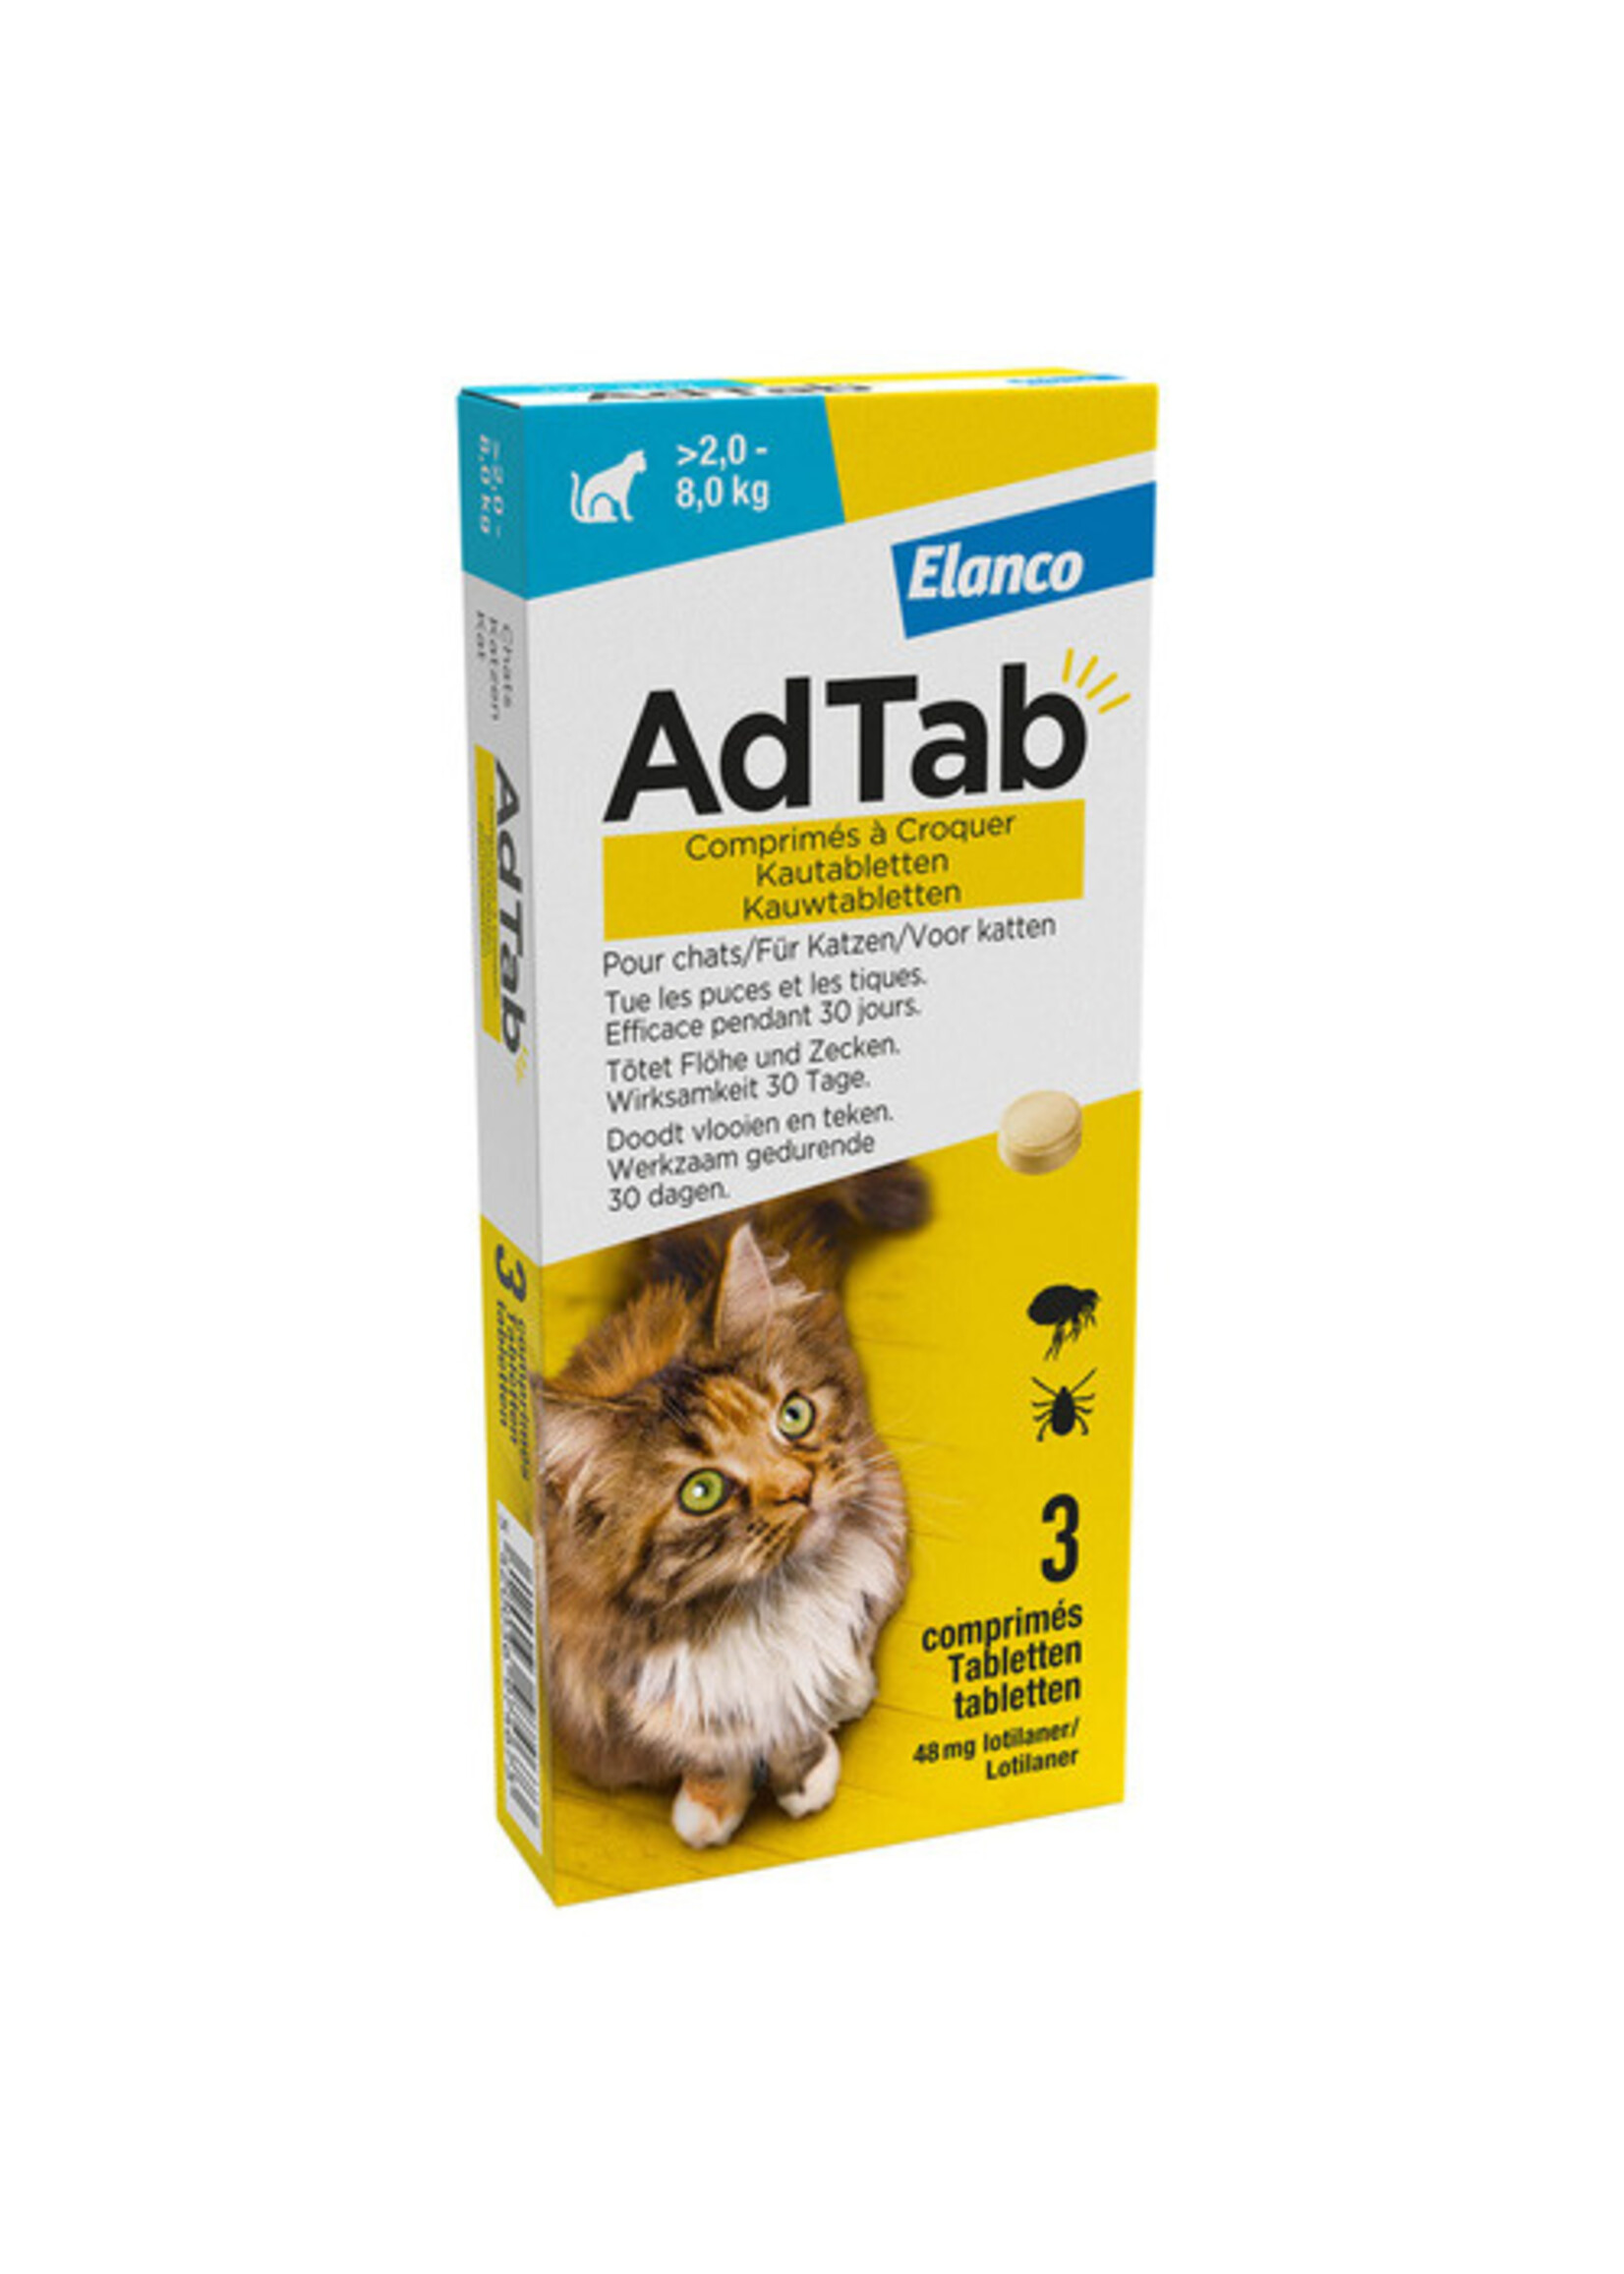 AdTab kauwtabletten kat. 2-8 kg.